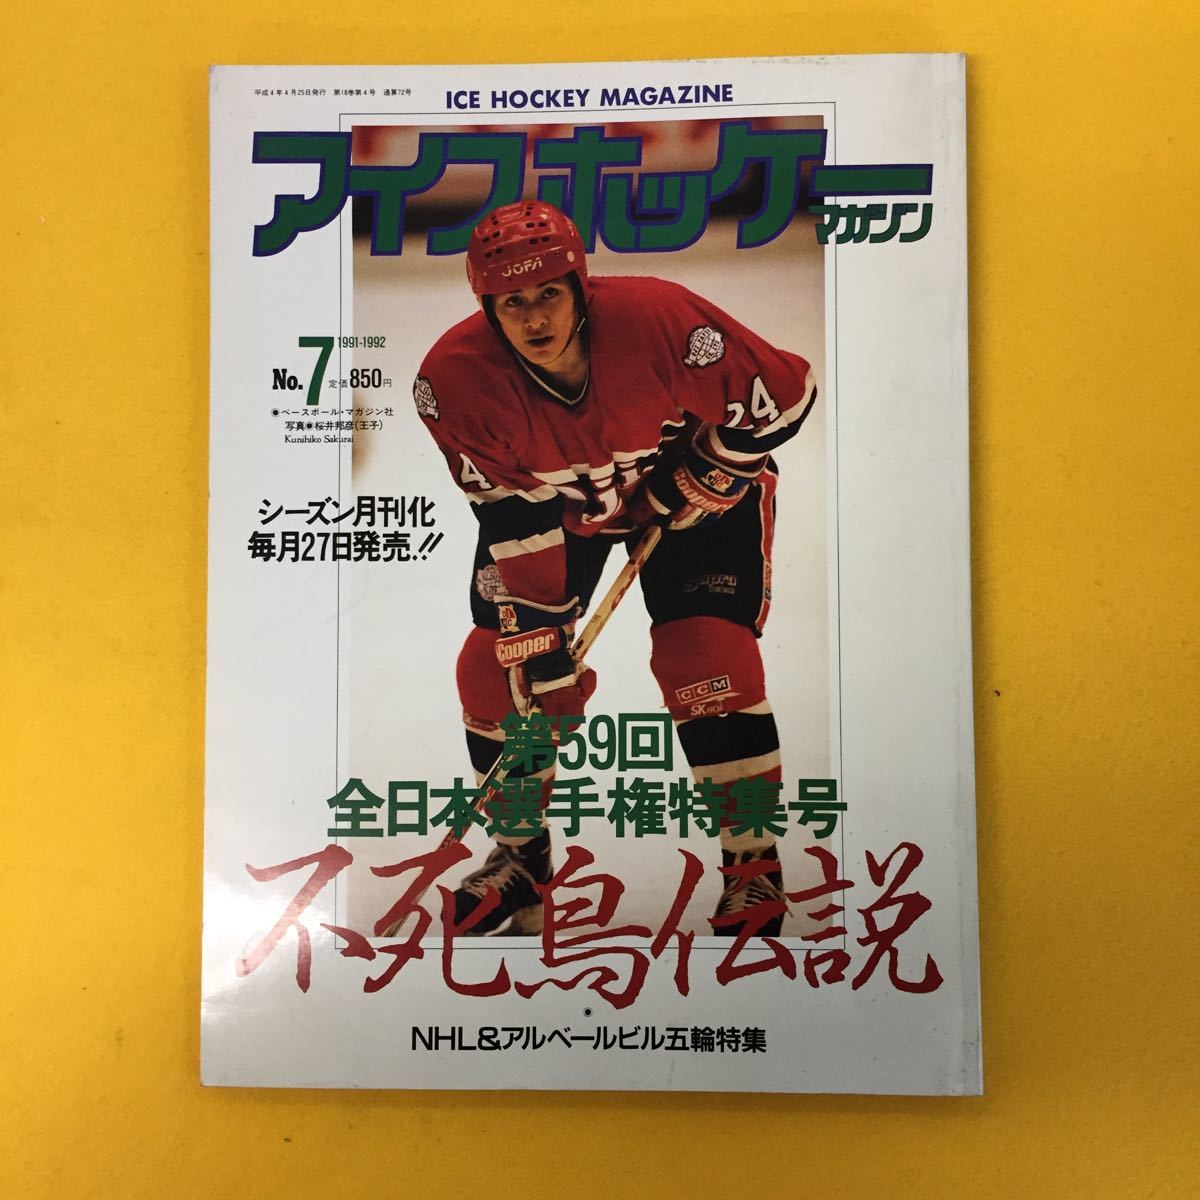 ａ037 ICE HOCKEY MAGAZINE 1991-1992 7 第59回全日本選手権特集号 ベースボール・マガジン社